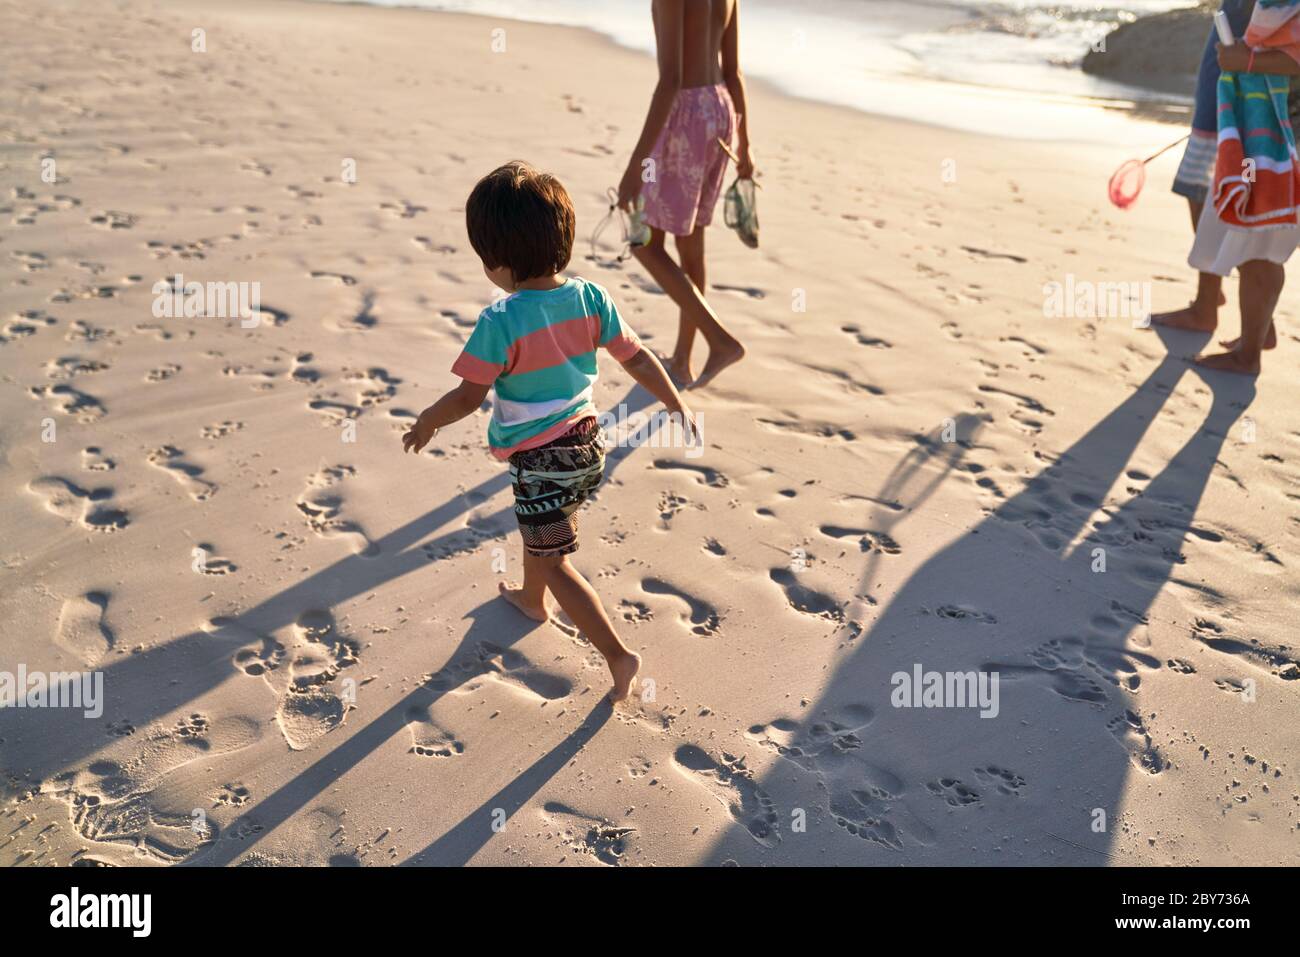 Lindo chico corriendo en la playa con la familia Foto de stock